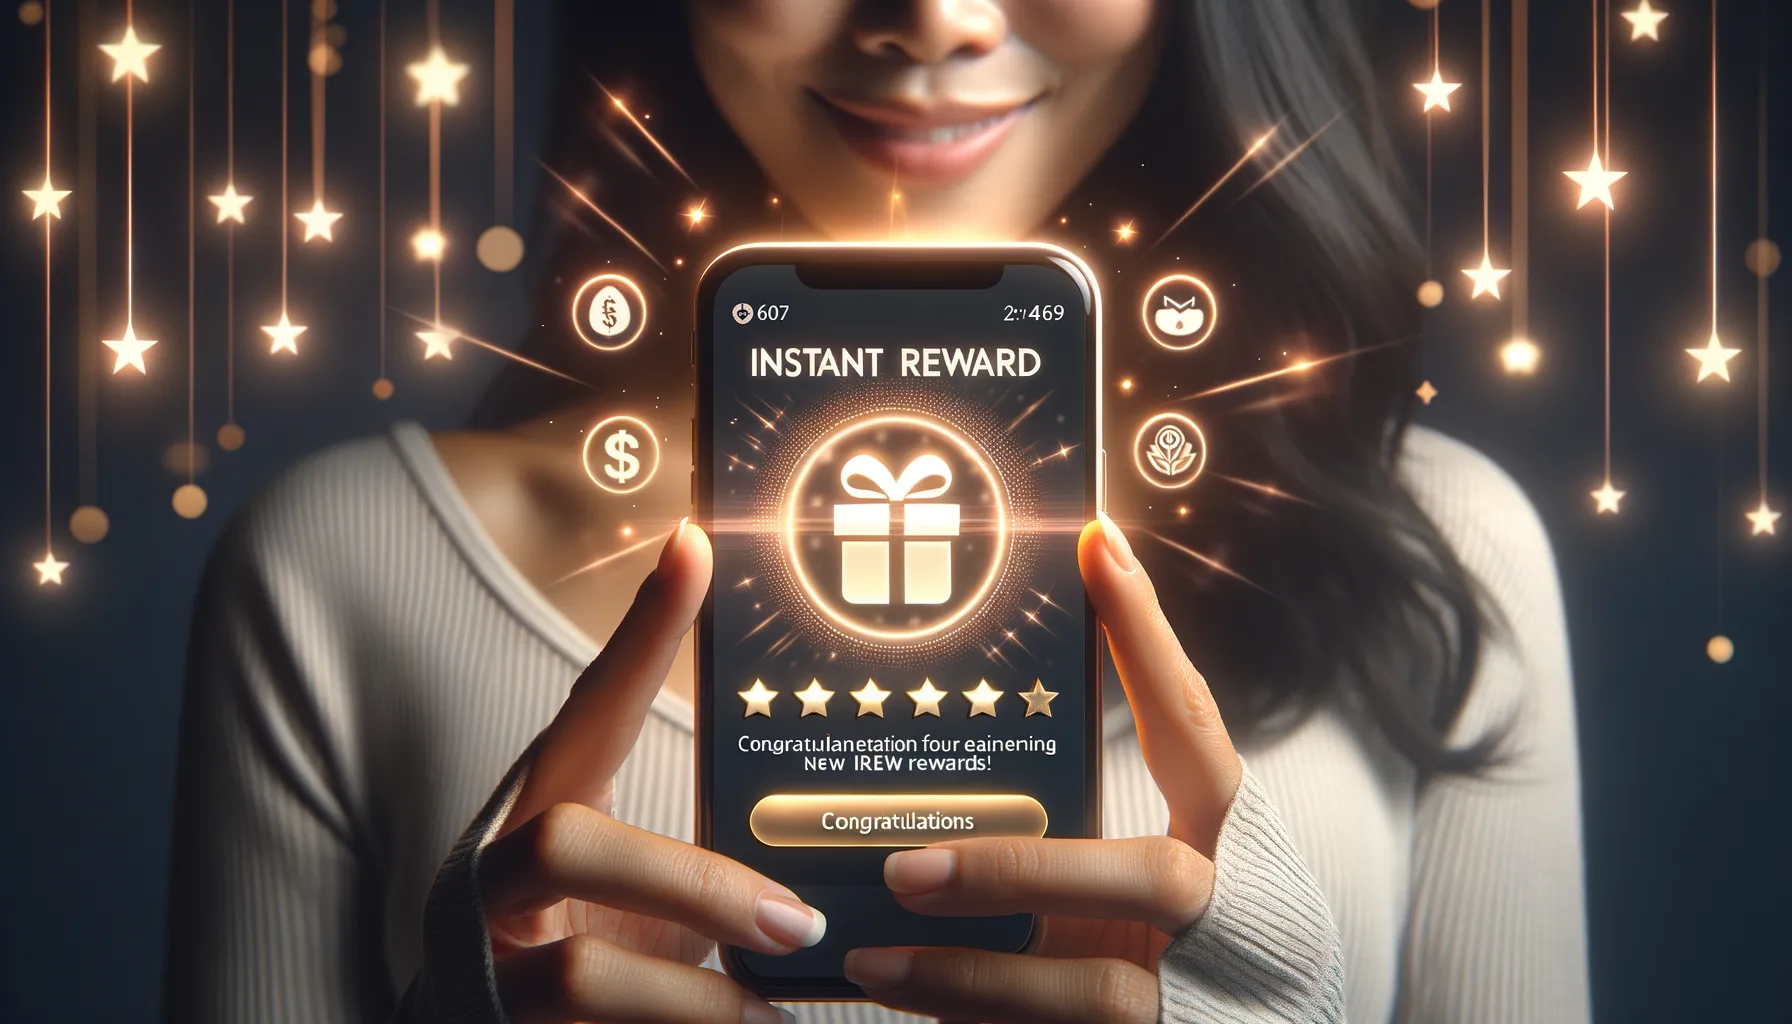 Instant Reward App Features [Guide]